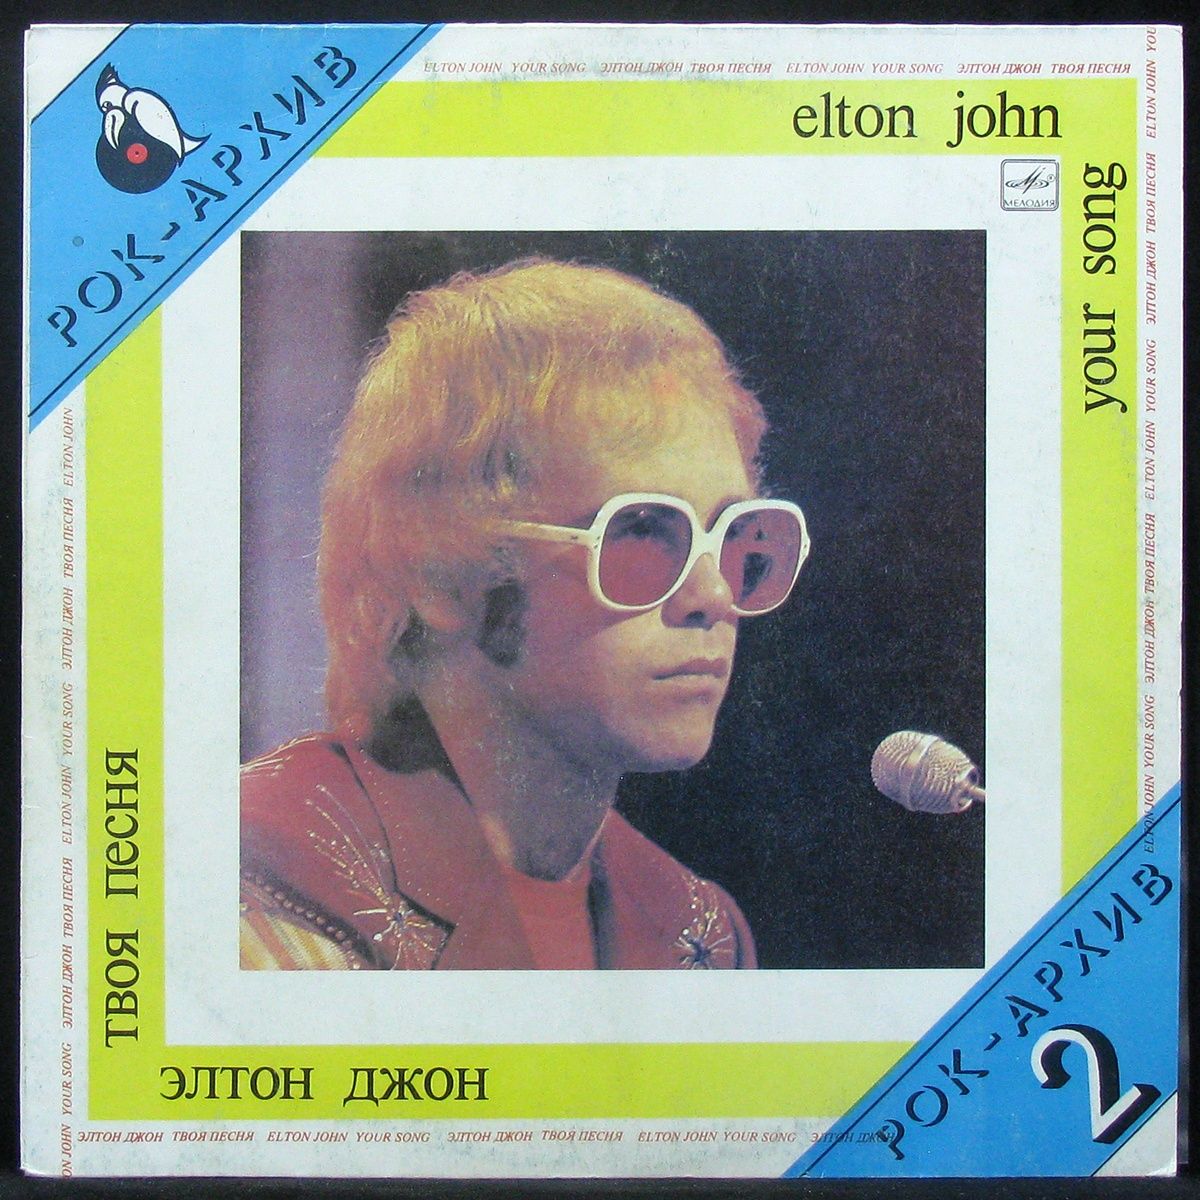 На часах твоих песня. Elton John виниловая пластинка. Врнил Элтон Джон. Элтон Джон пластинка мелодия. Пластинка Элтона Джона винил.